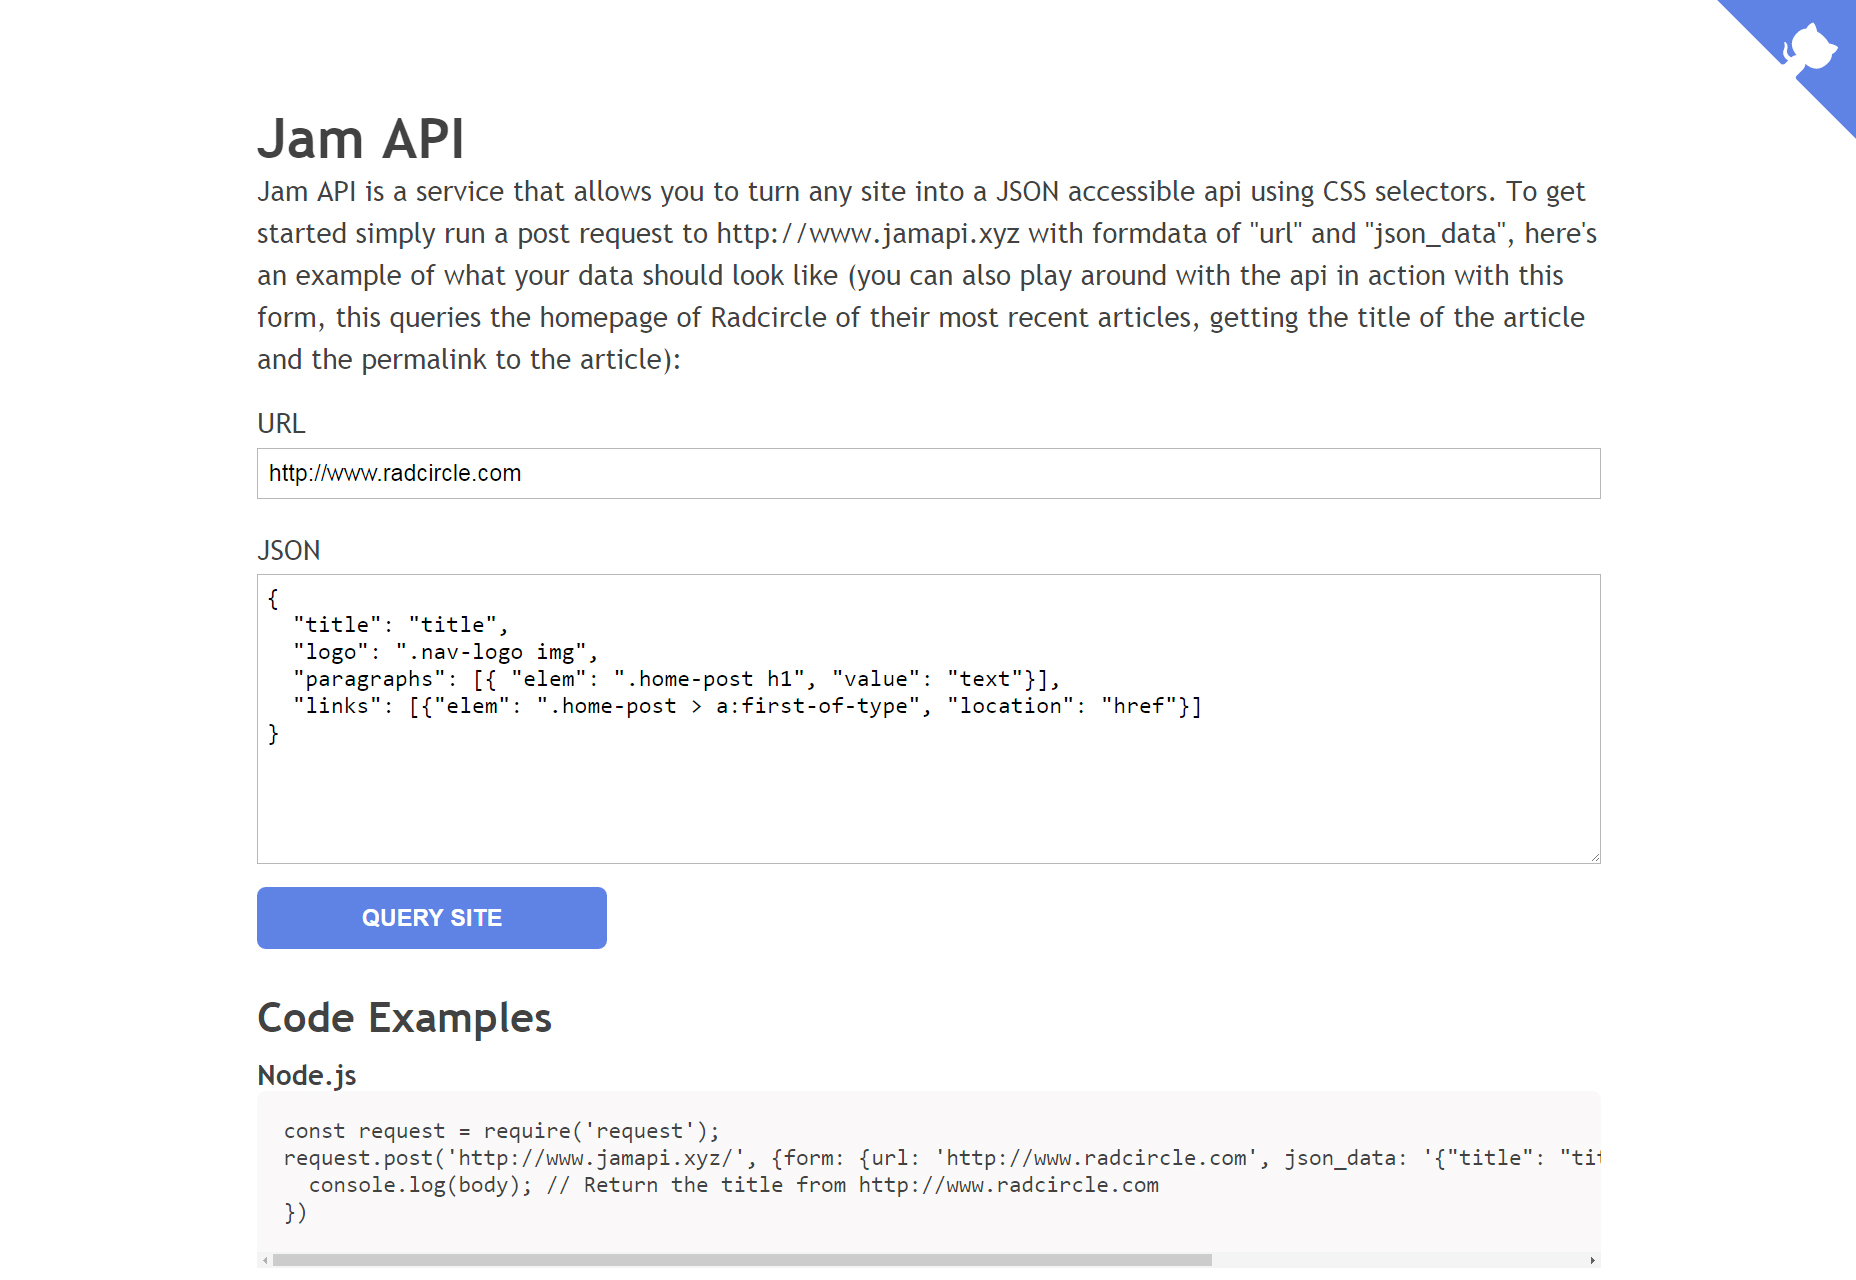 Jam API: JSON Accessible Websites Using CSS Selectors